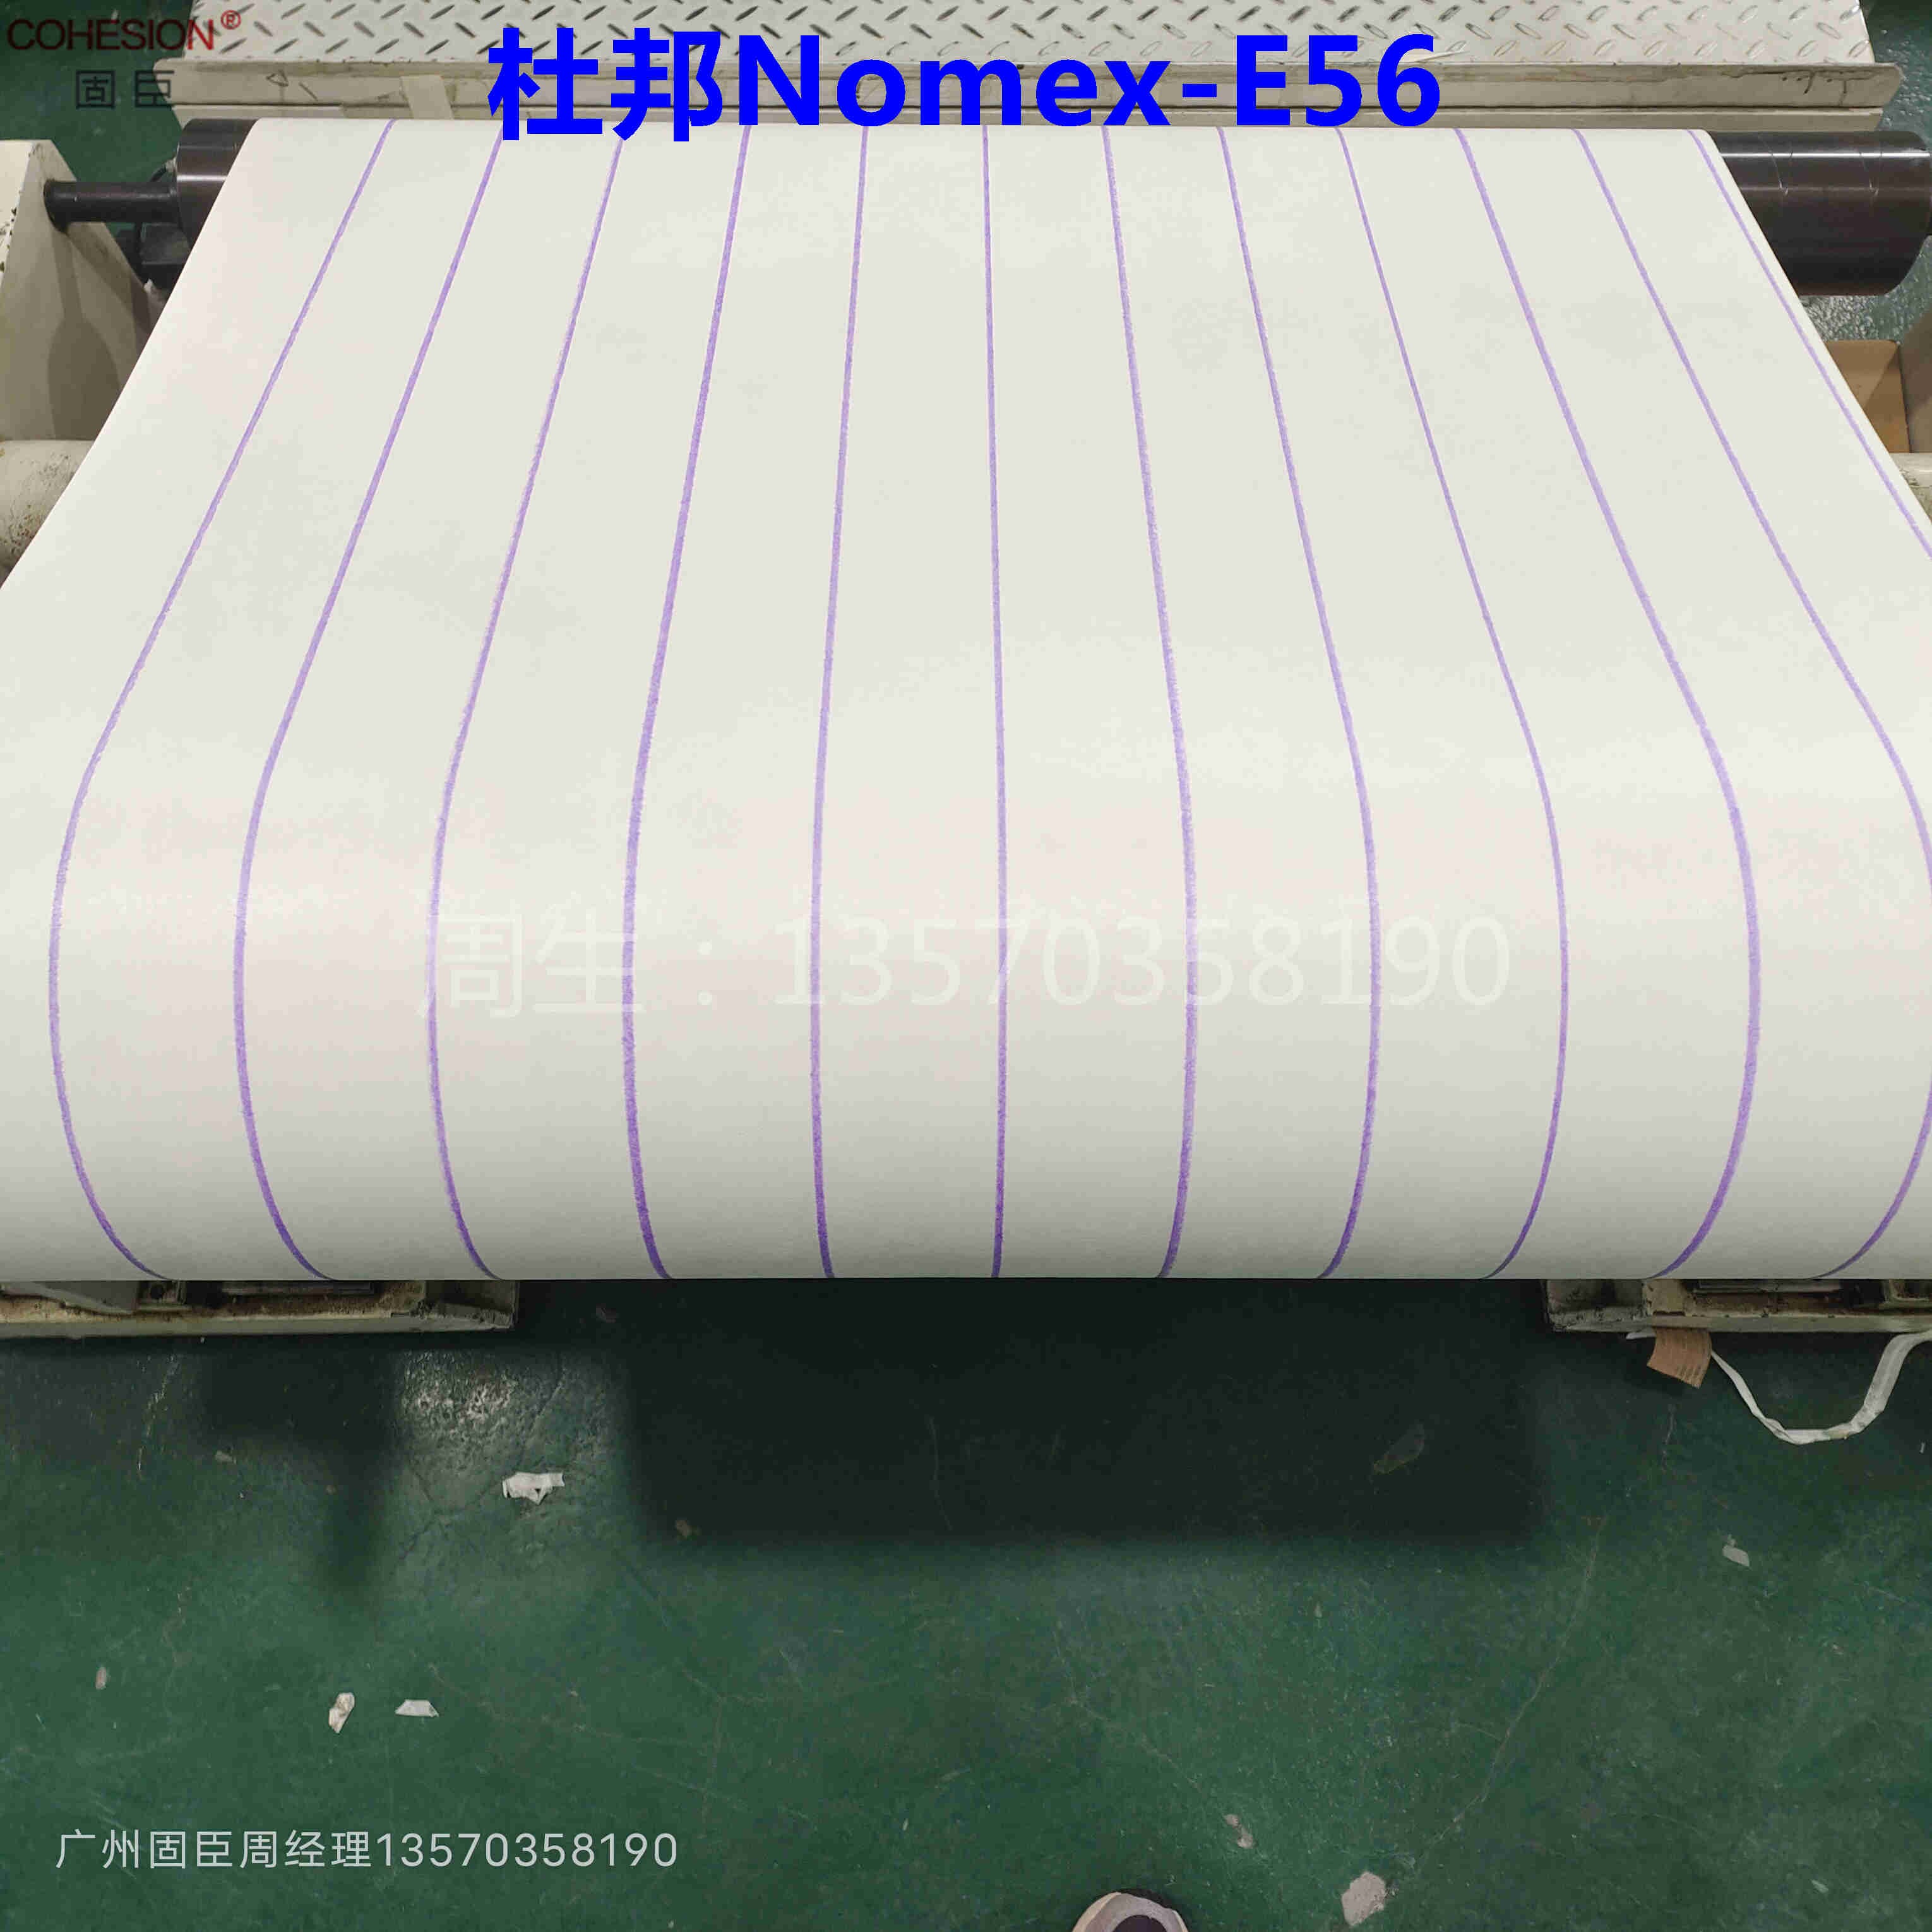 DUPONT进口诺美纸Nomex-E56(356)